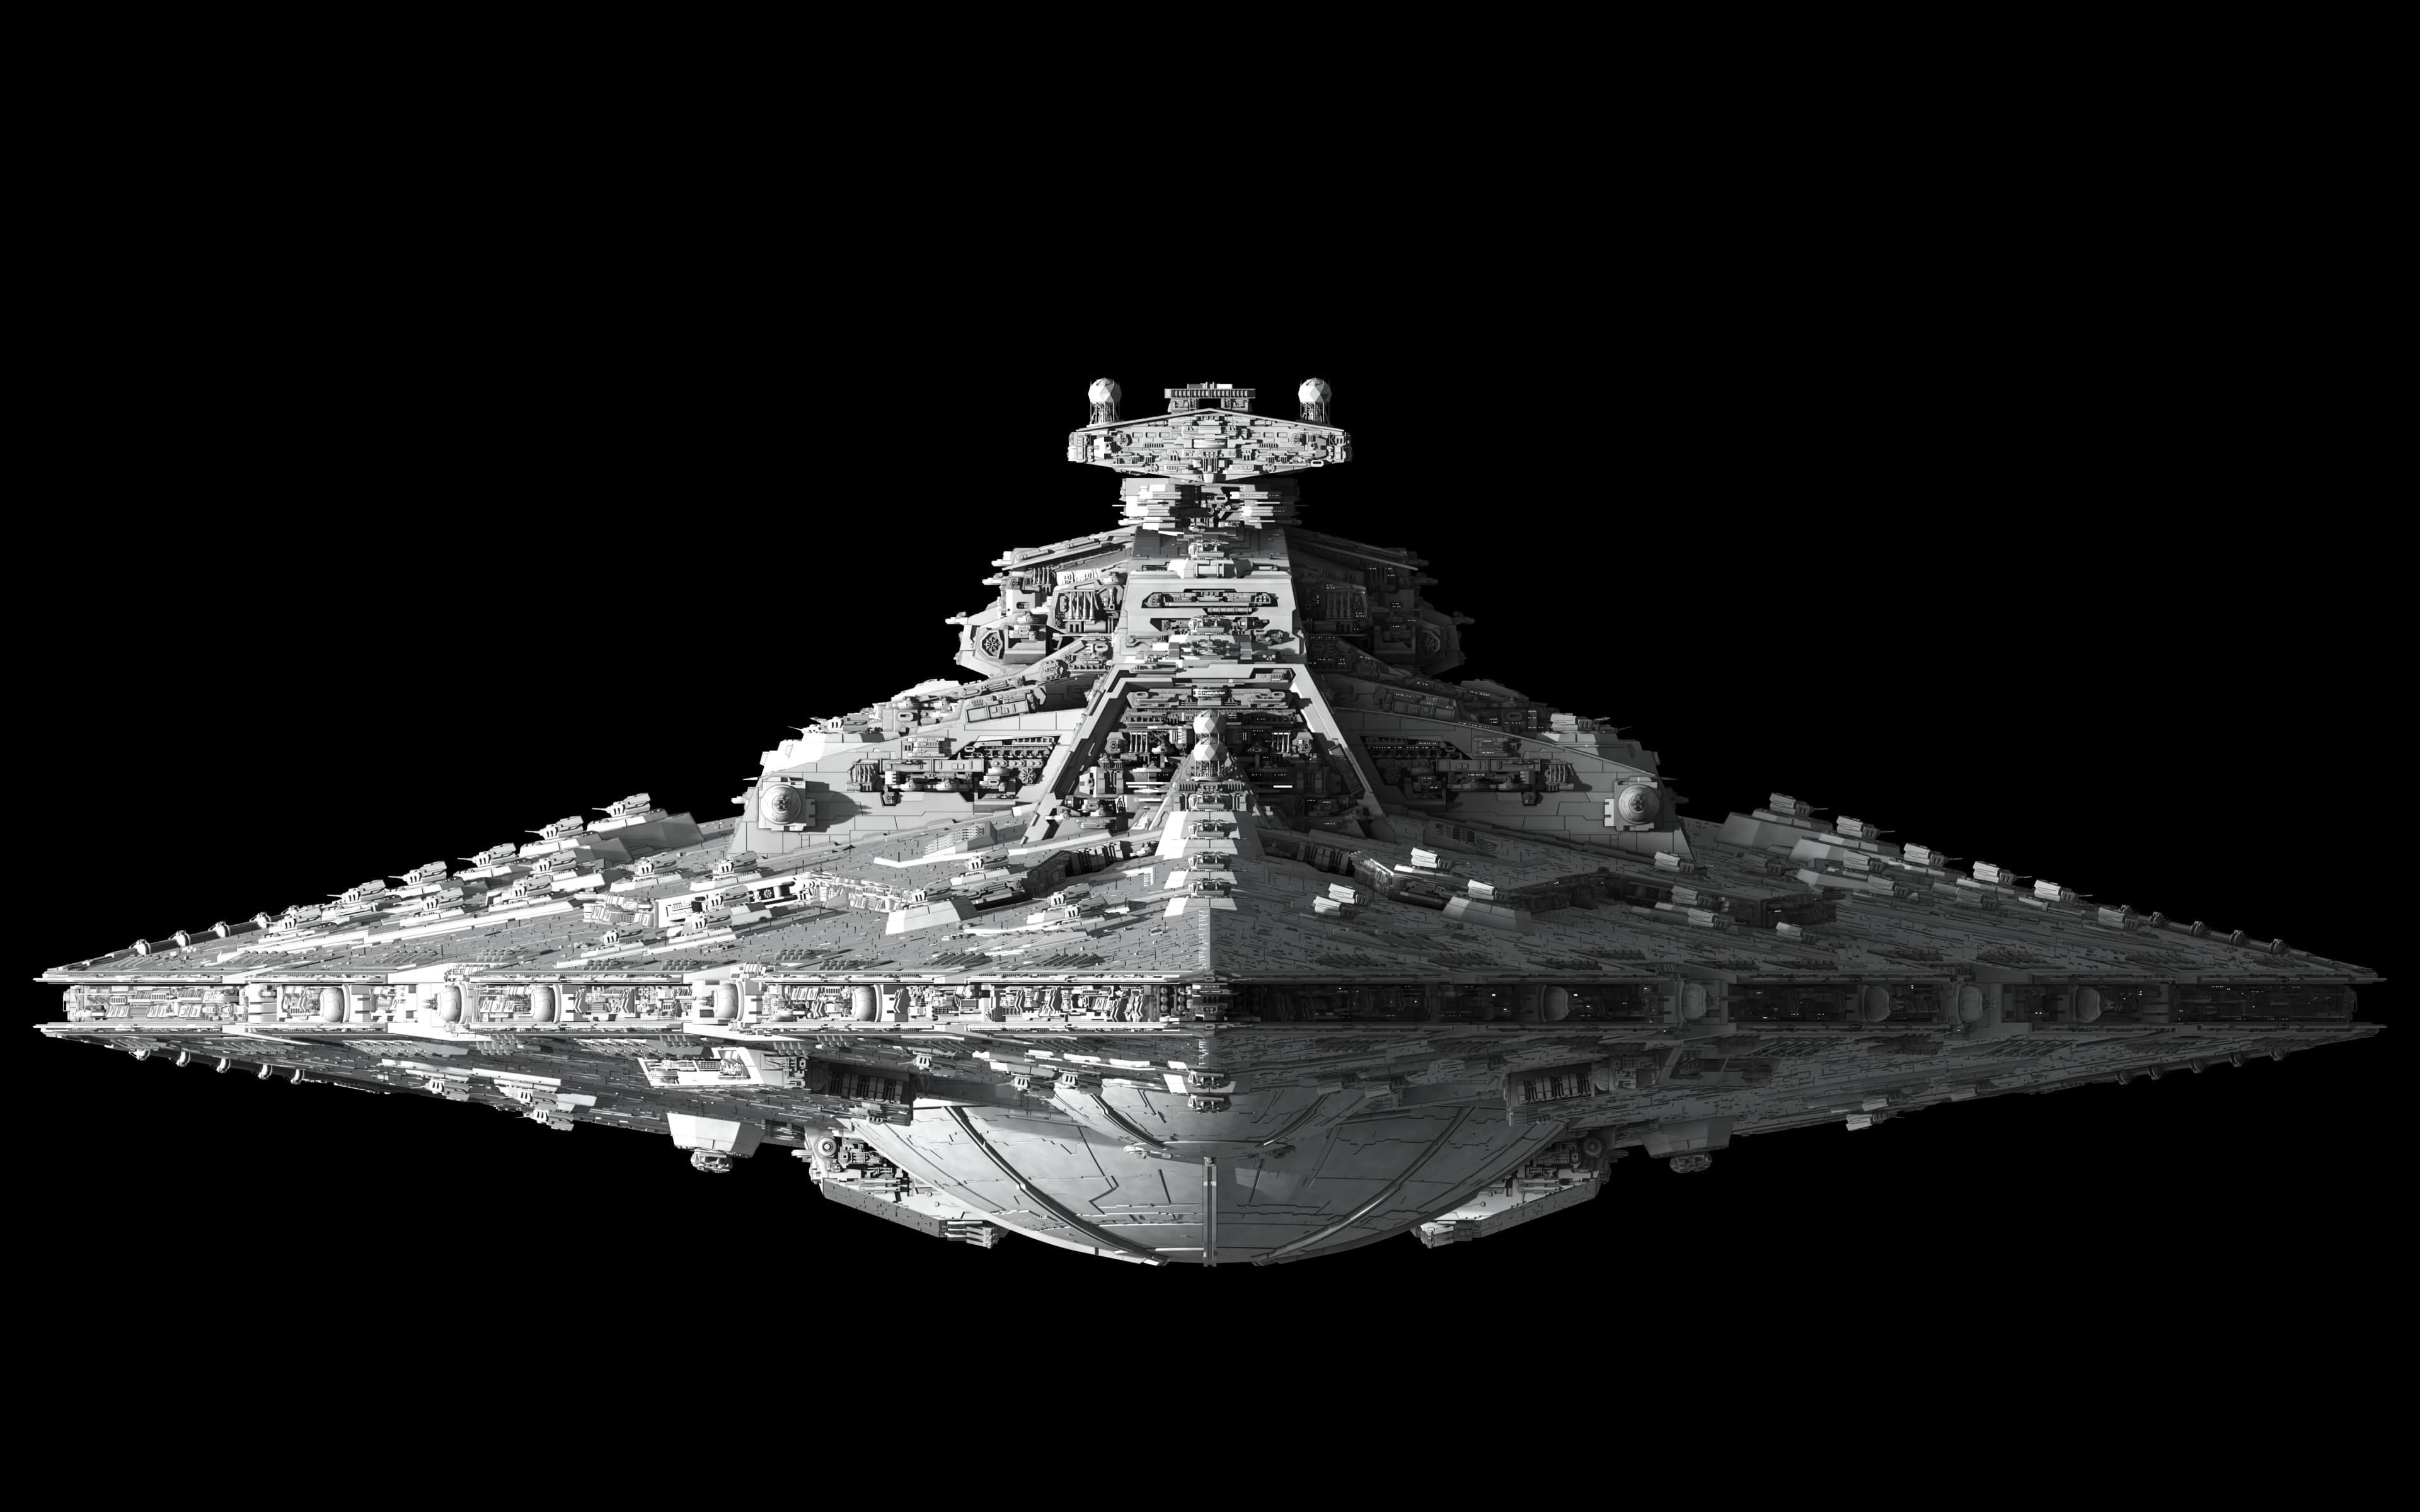 Scifi Star Wars Spaceship 3D Digital Art Wallpaper